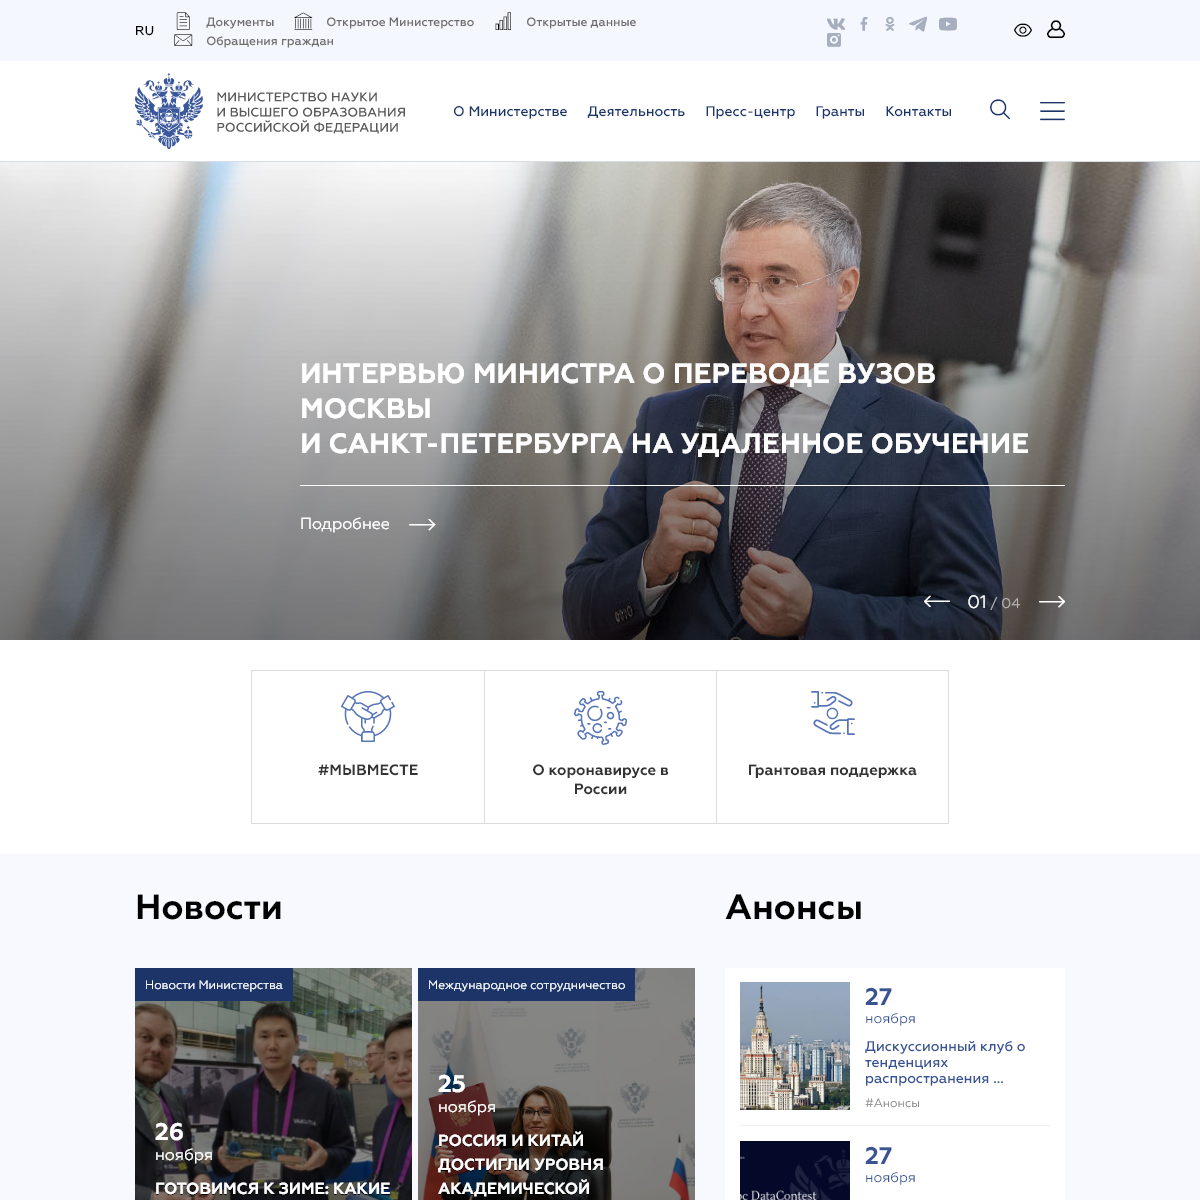 A complete backup of minobrnauki.gov.ru